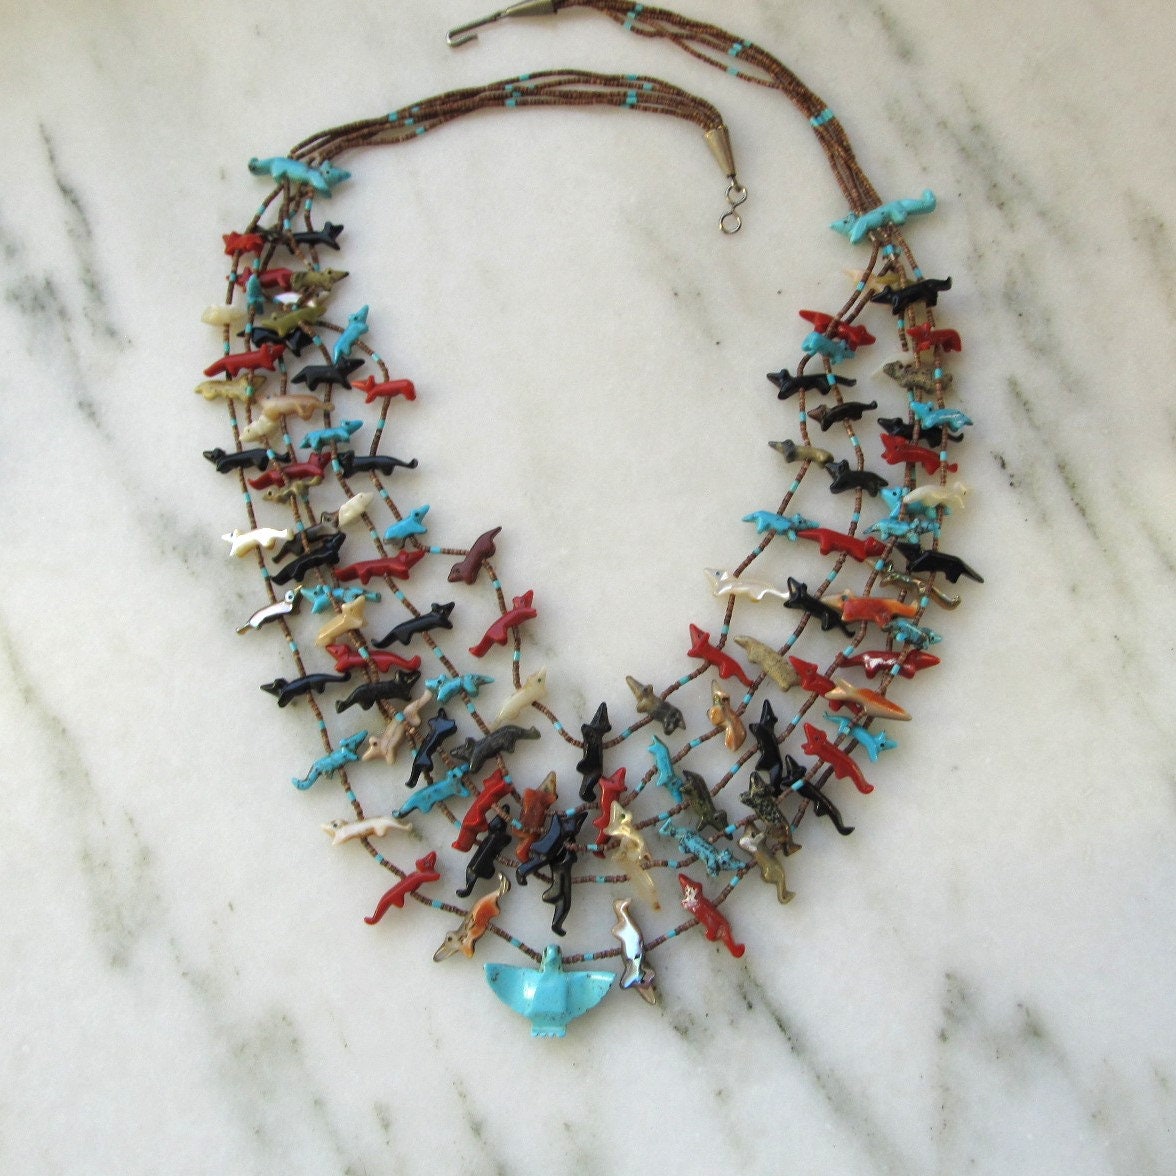 2 Roar Natural Lapis Zuni Bear Animal Beads | 15x12x4mm | Blue and White | 2 Beads, Adult Unisex